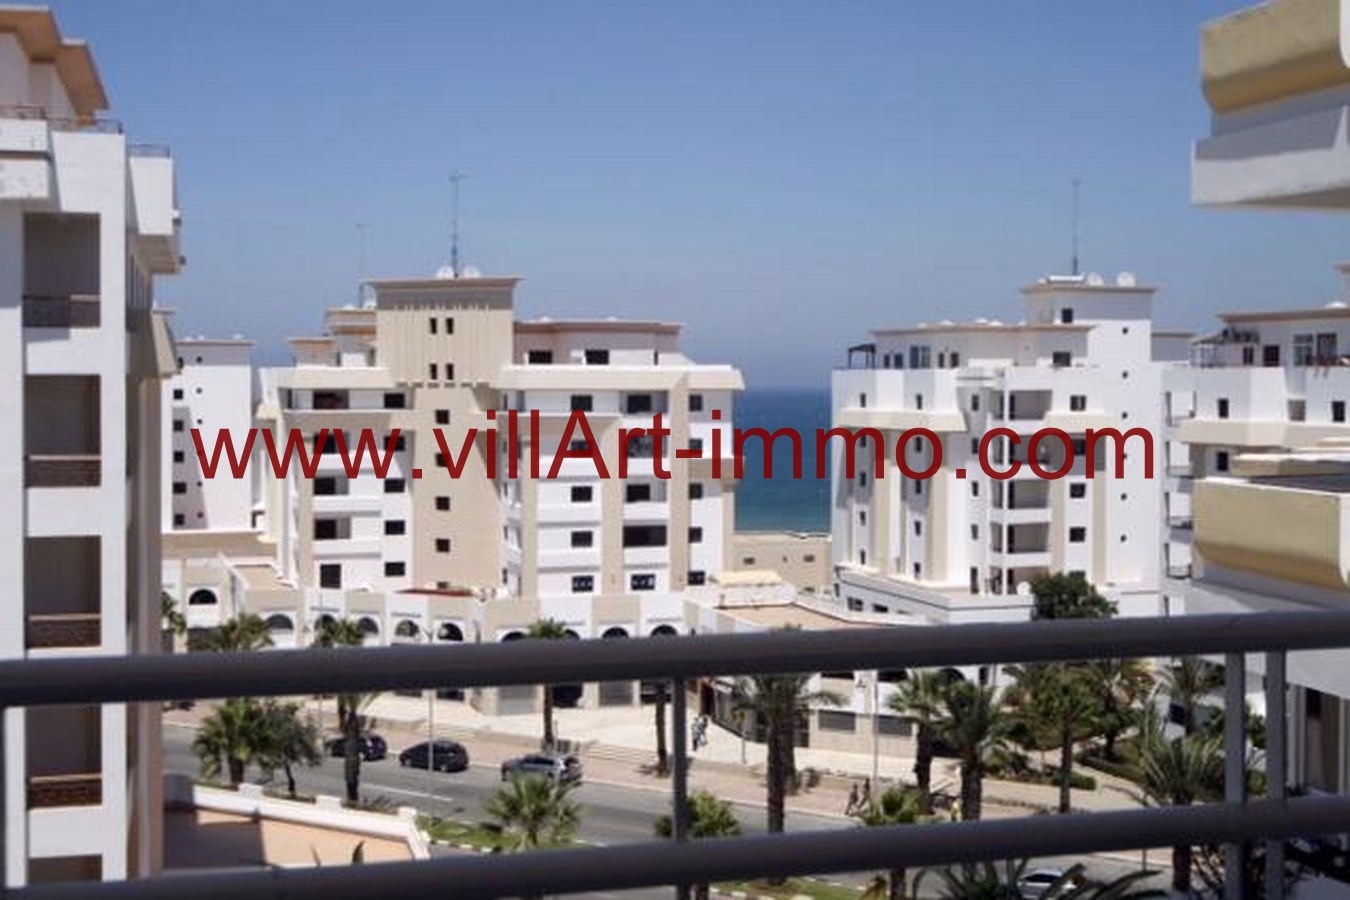 5-Location-Appartement-Meublé-Tanger-Balcon-L709-Villart immo